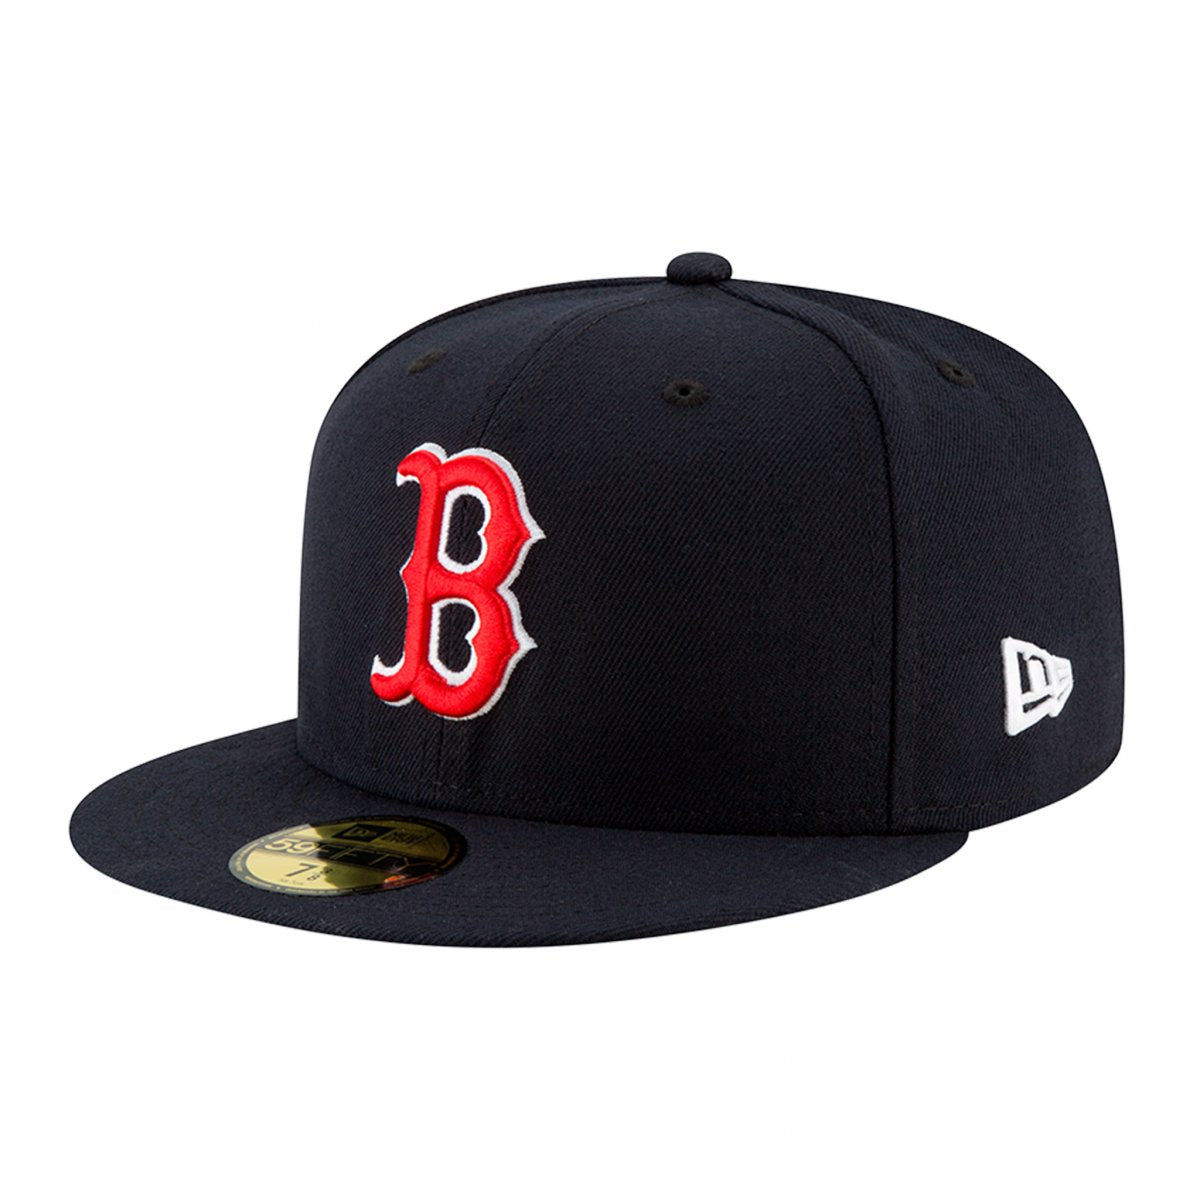 Gorra New Era Boston Red Sox 59fifty